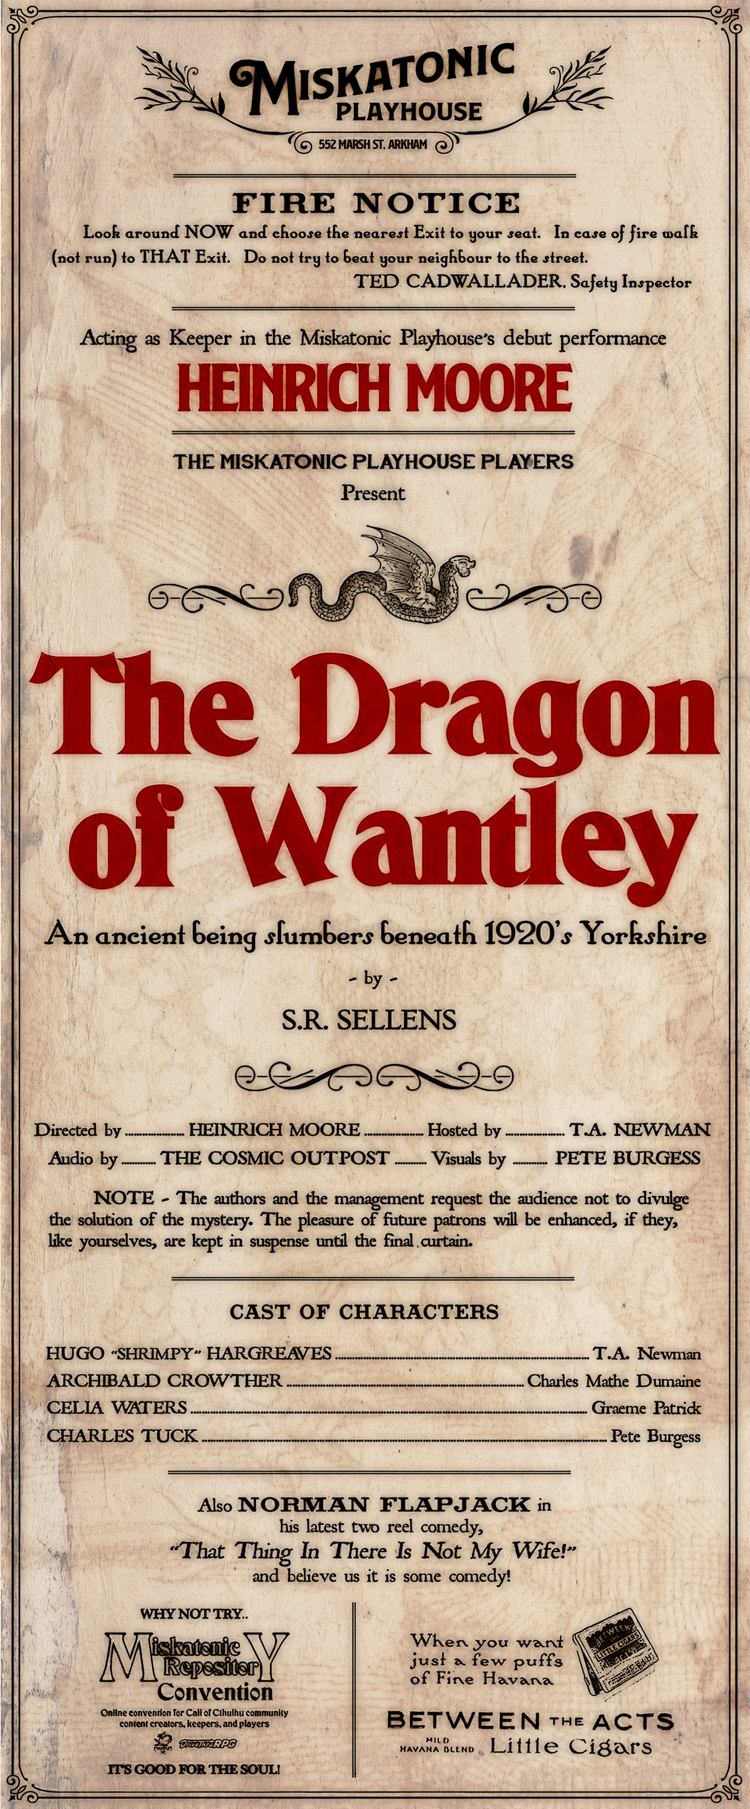 The Dragon of Wantley on Miskatonic Playhouse